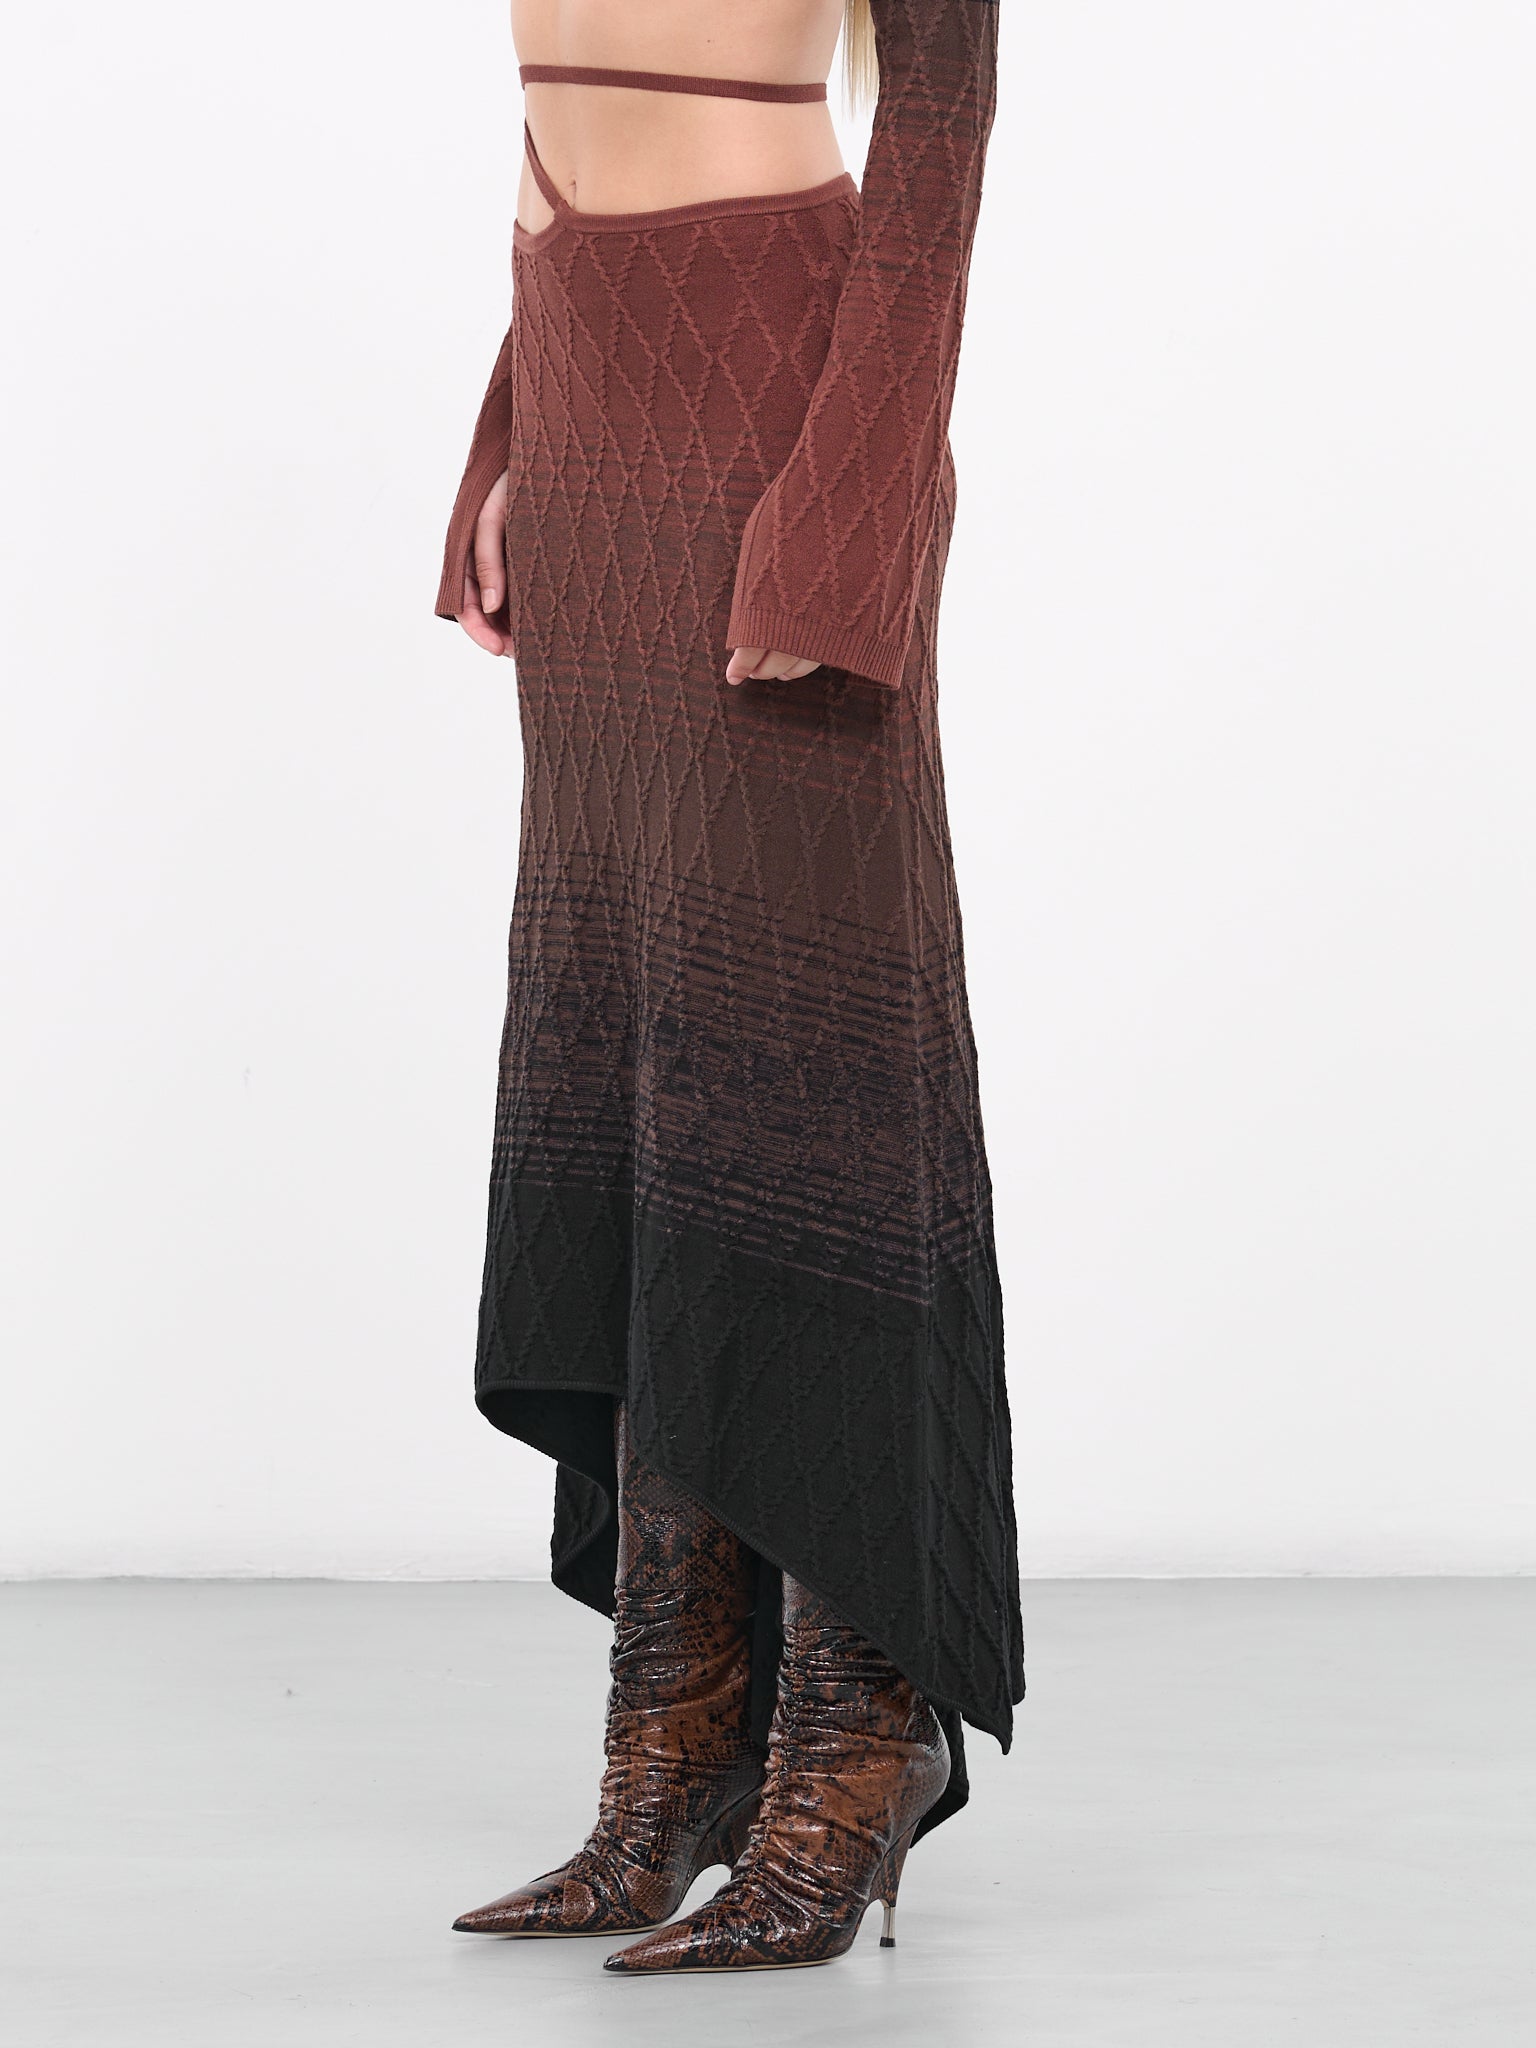 Salem Skirt (999-902-O-BROWN-BLACK)